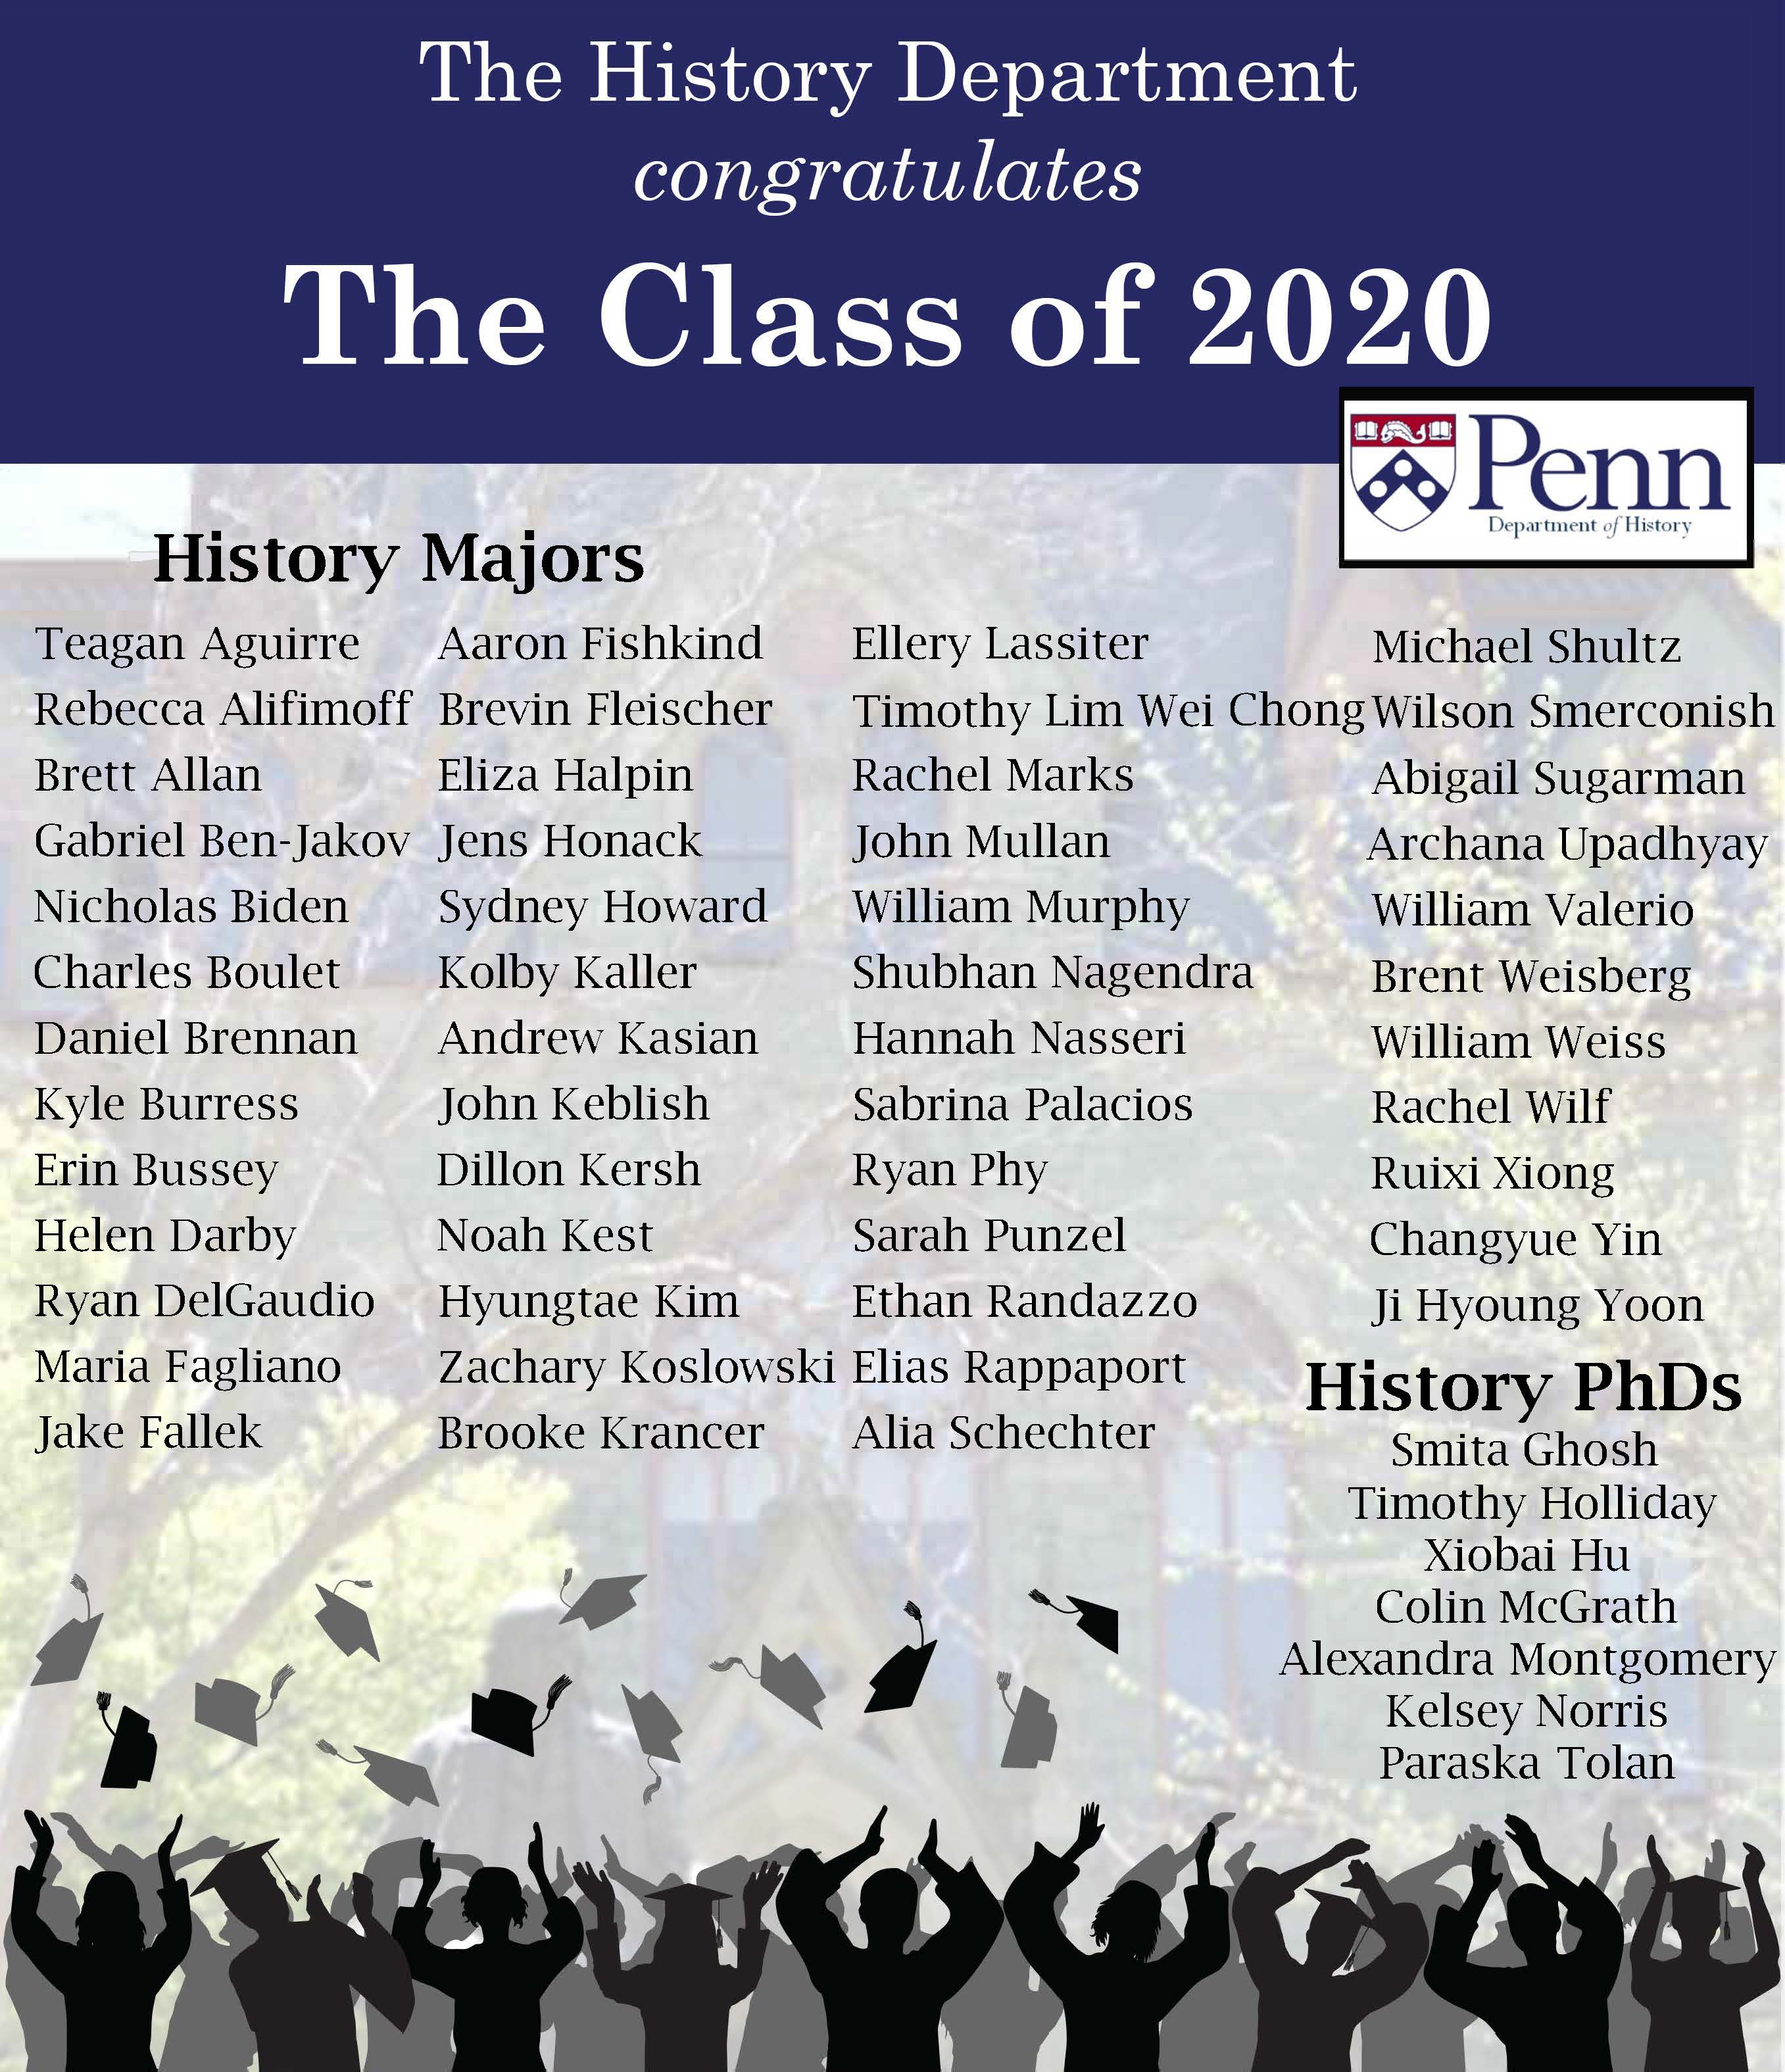 Congratulations Class of 2020